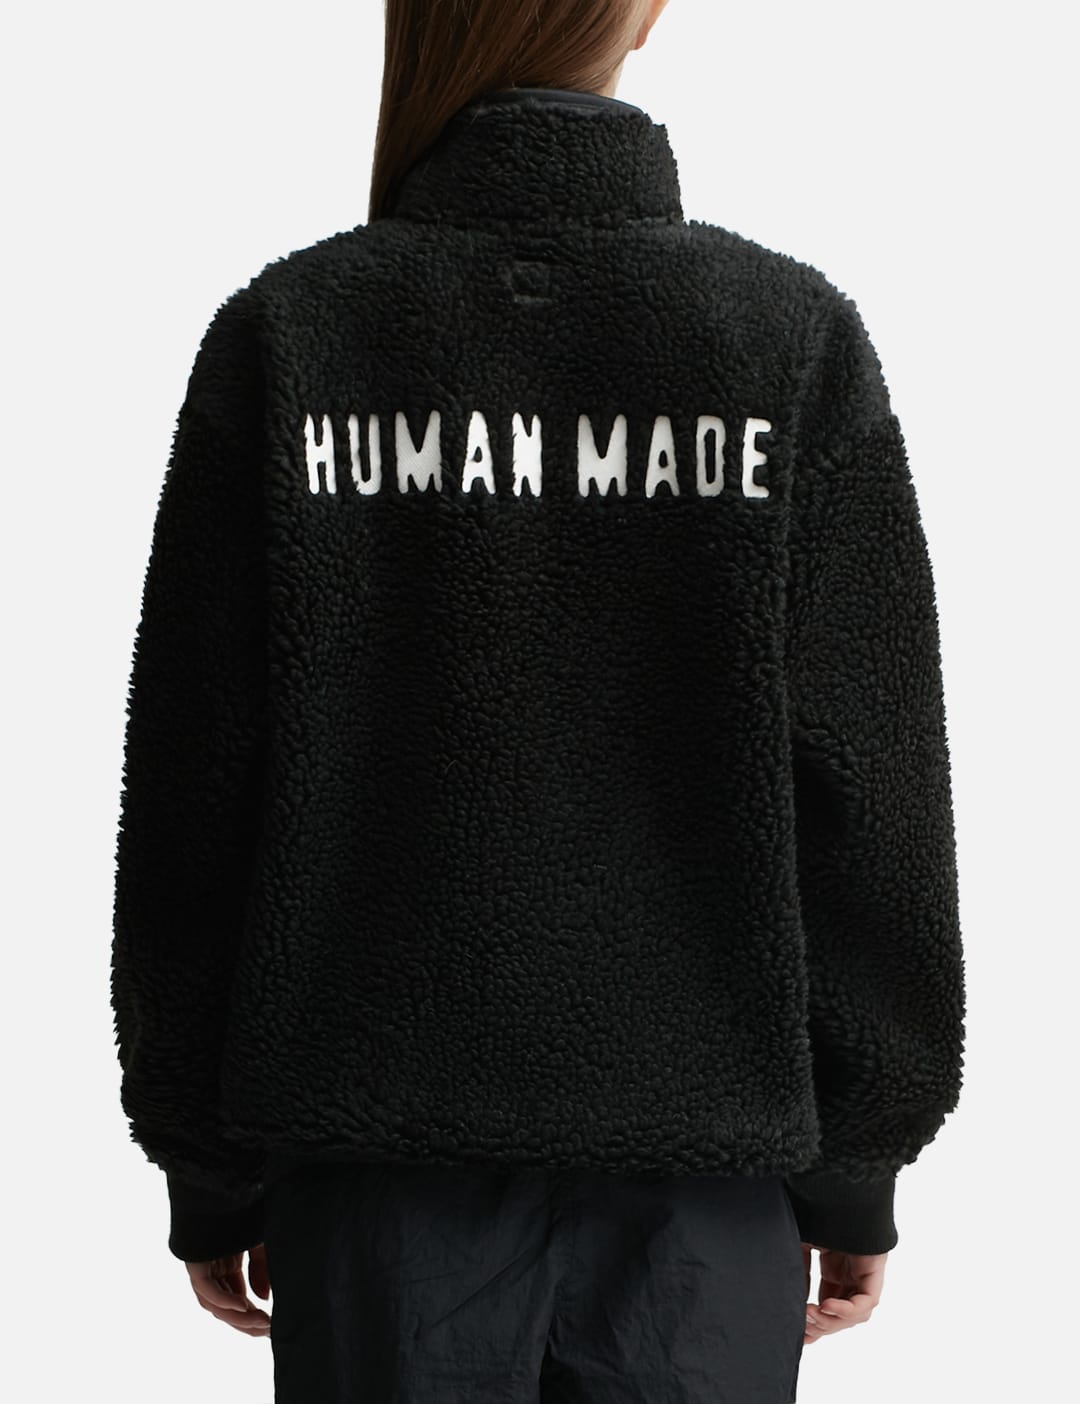 HUMAN MADE Boa fleece Pullover BLACK新品で京都で購入 - ジャケット ...